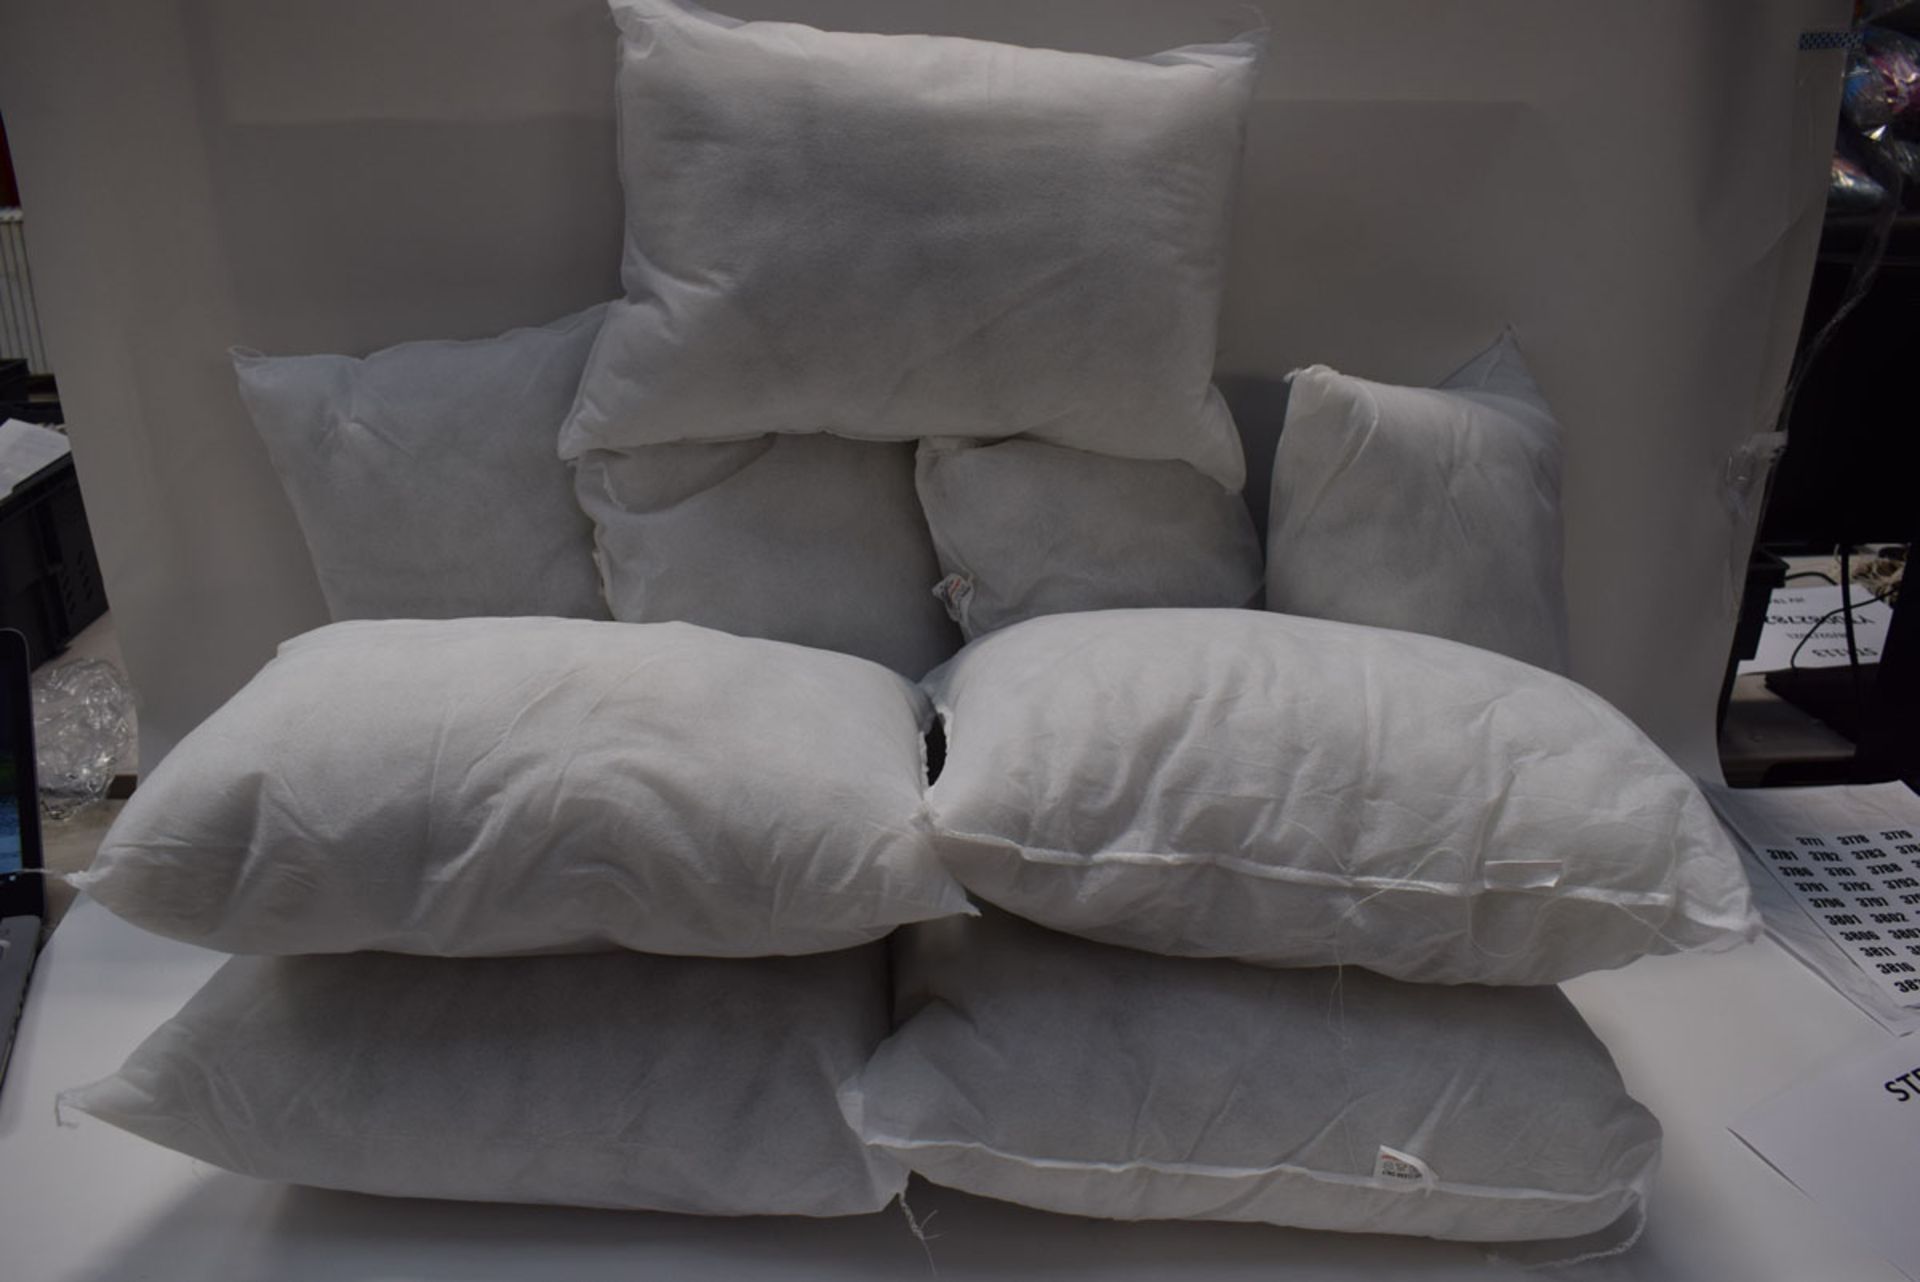 Nine cushion inners